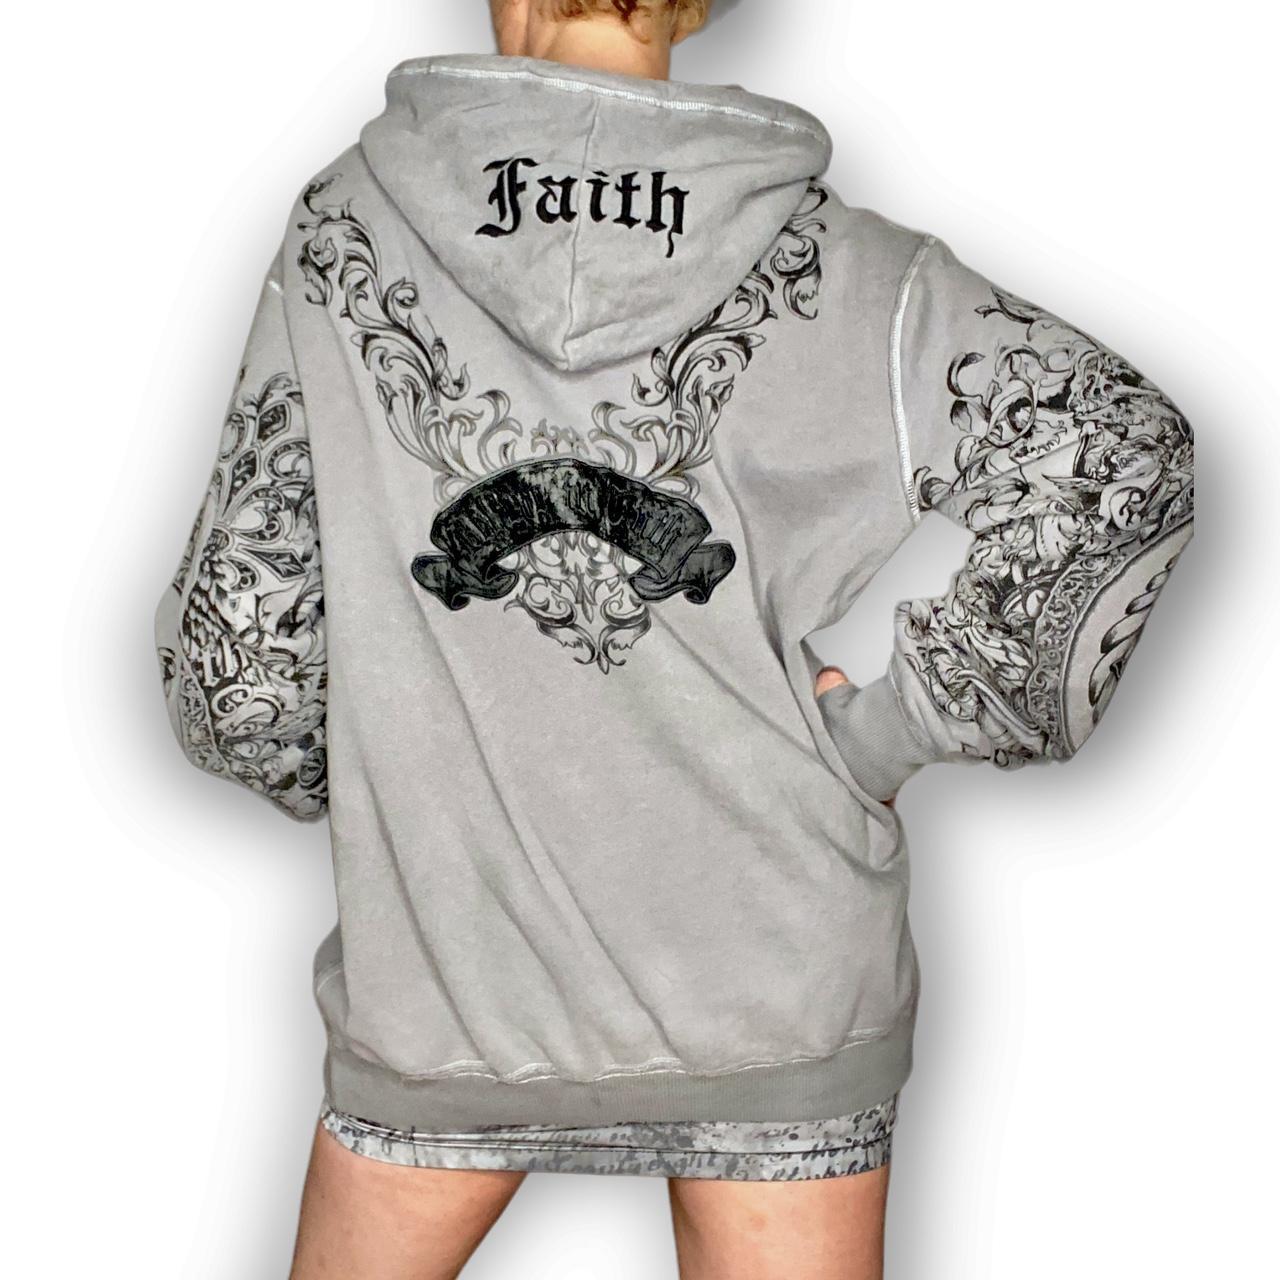 Faith Connexion Women's Grey and Black Hoodie